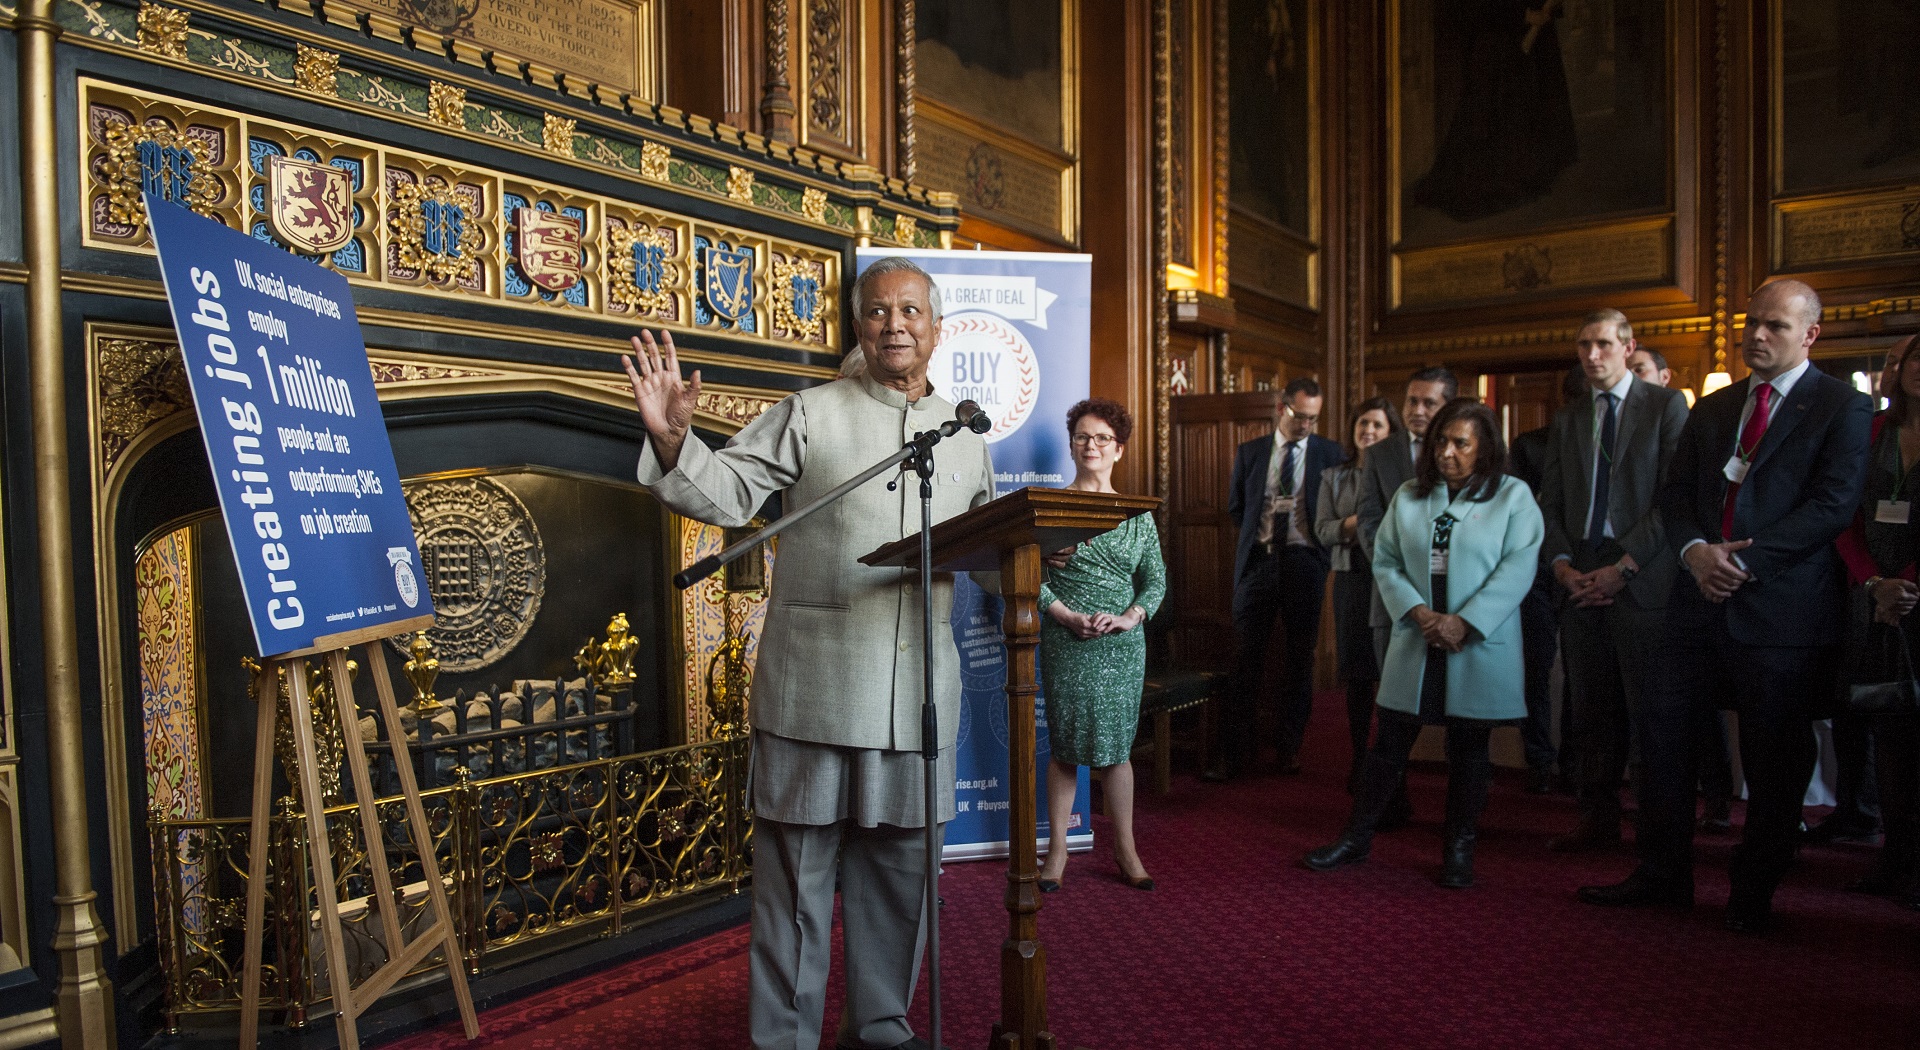 Professor Muhammad Yunus speaking at a Social Enterprise UK event in Parliament